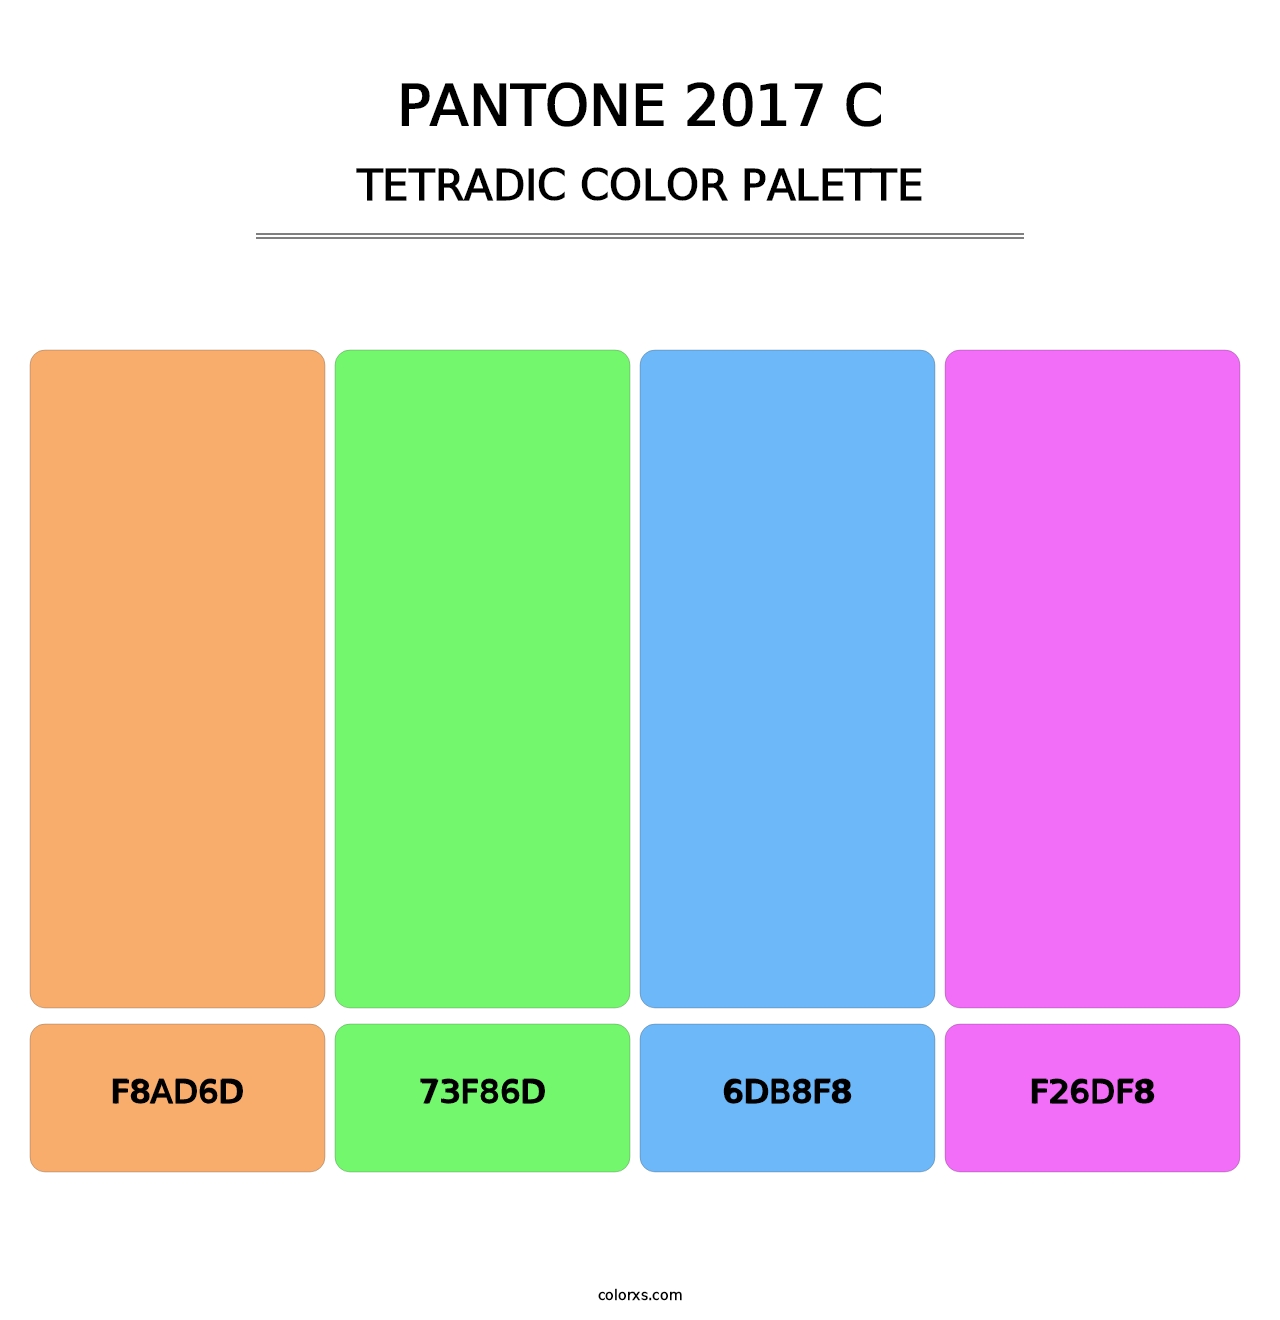 PANTONE 2017 C - Tetradic Color Palette